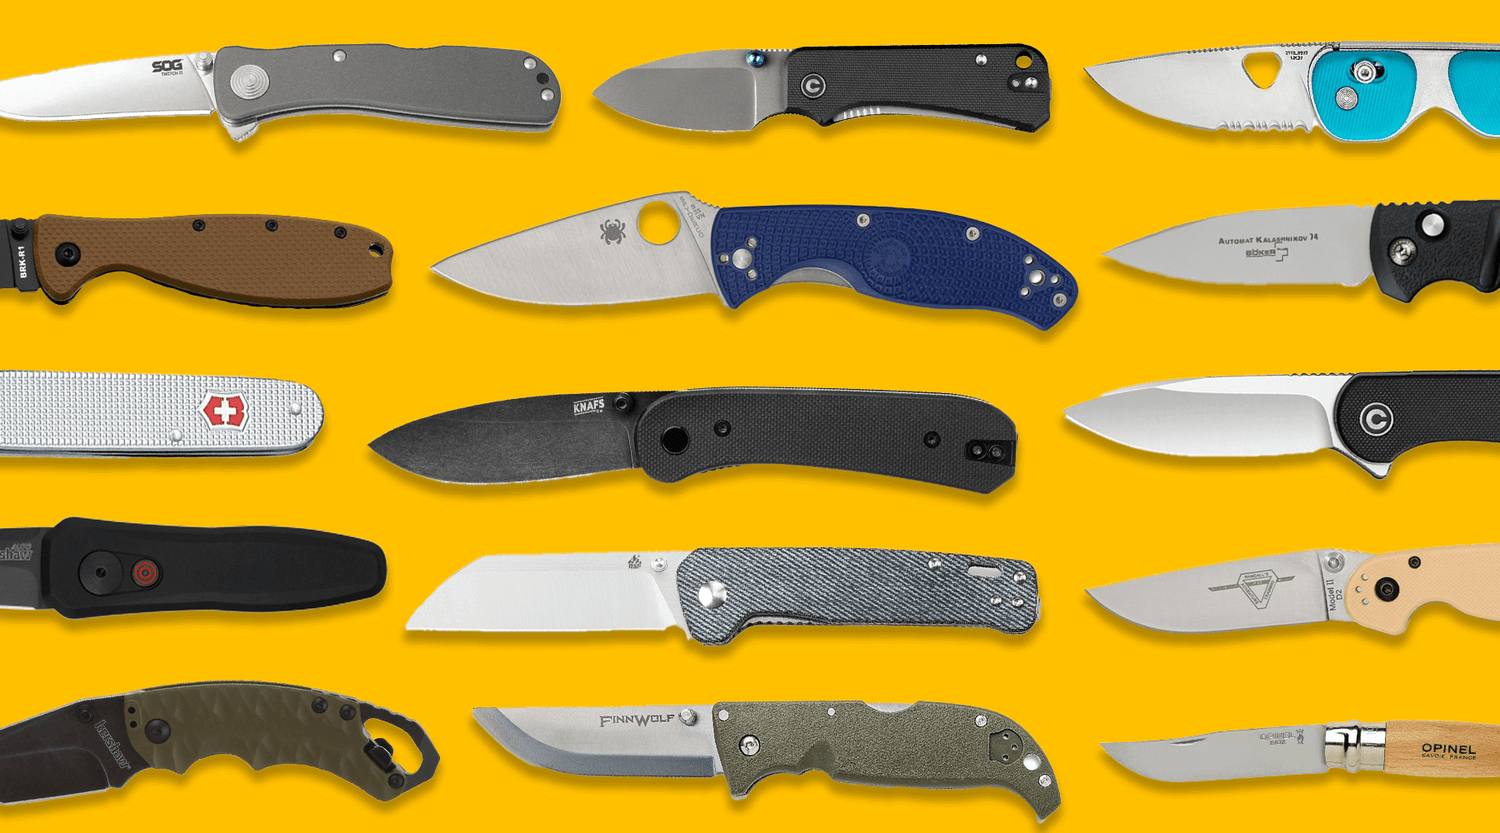 15 Best Budget EDC Knives